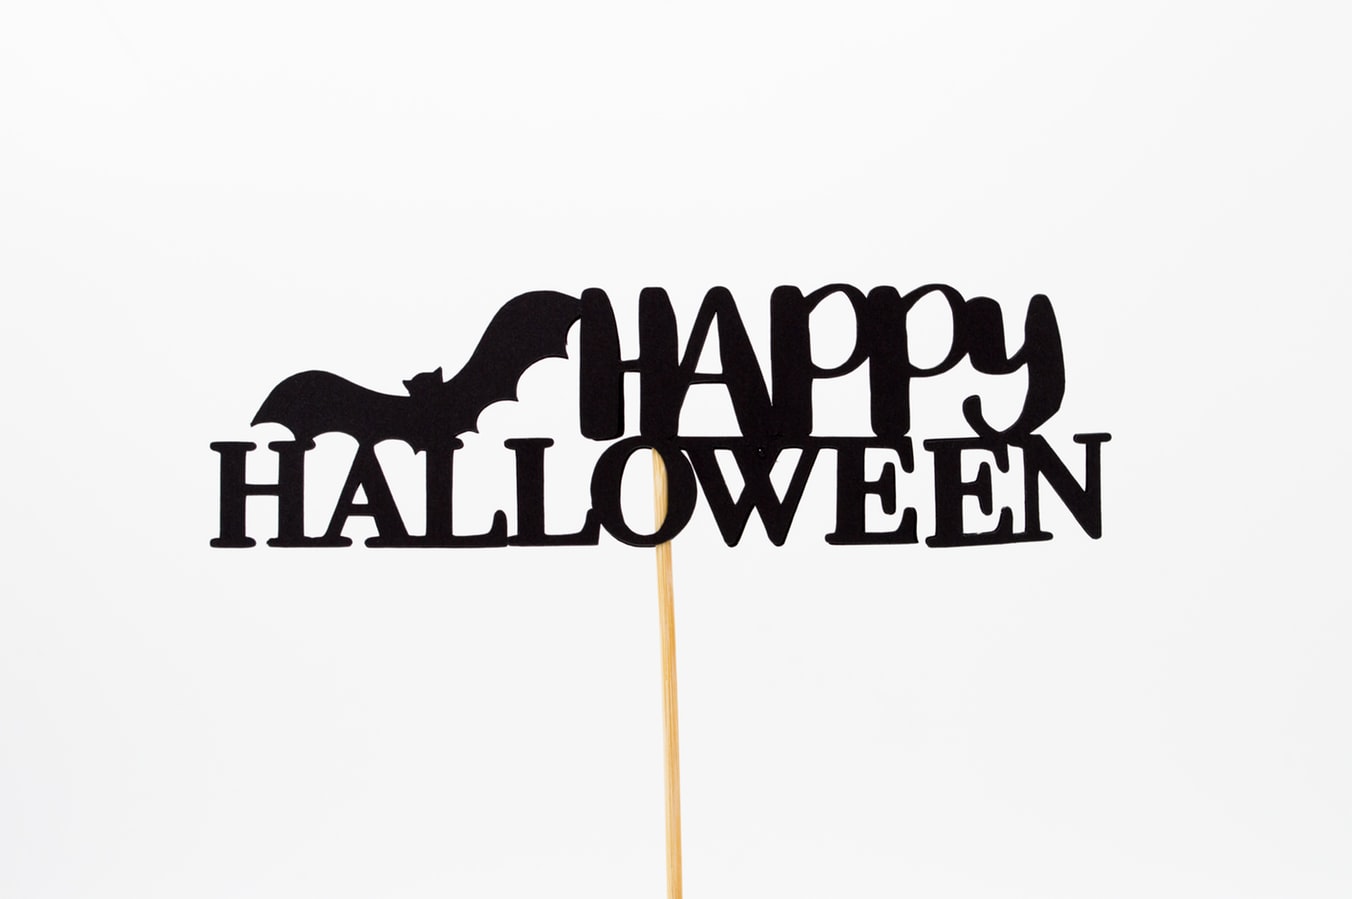 Creative Writing: How To Write Amazingly Scary Halloween Stories | Uncustomary